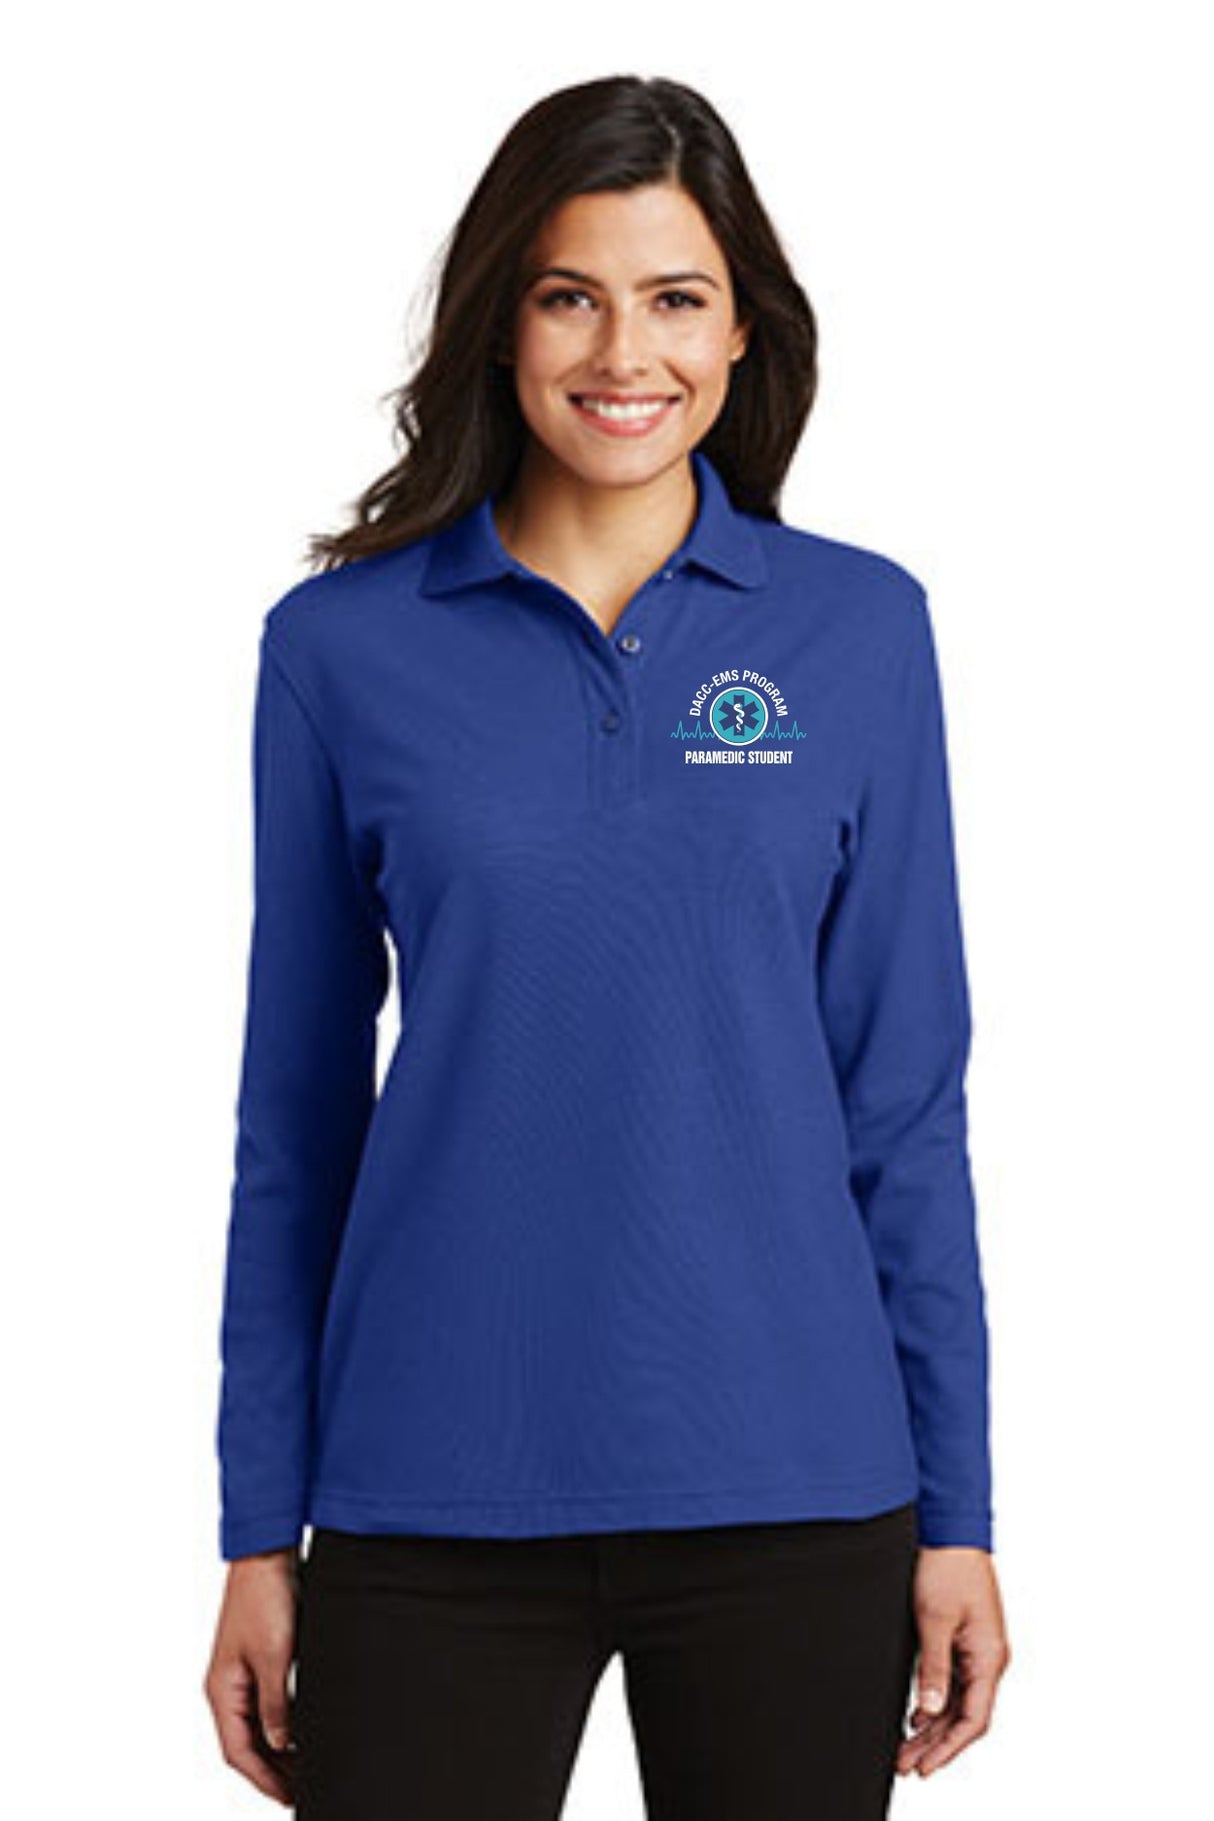 Paramedic Program Long-Sleeve Women's Polo Shirt